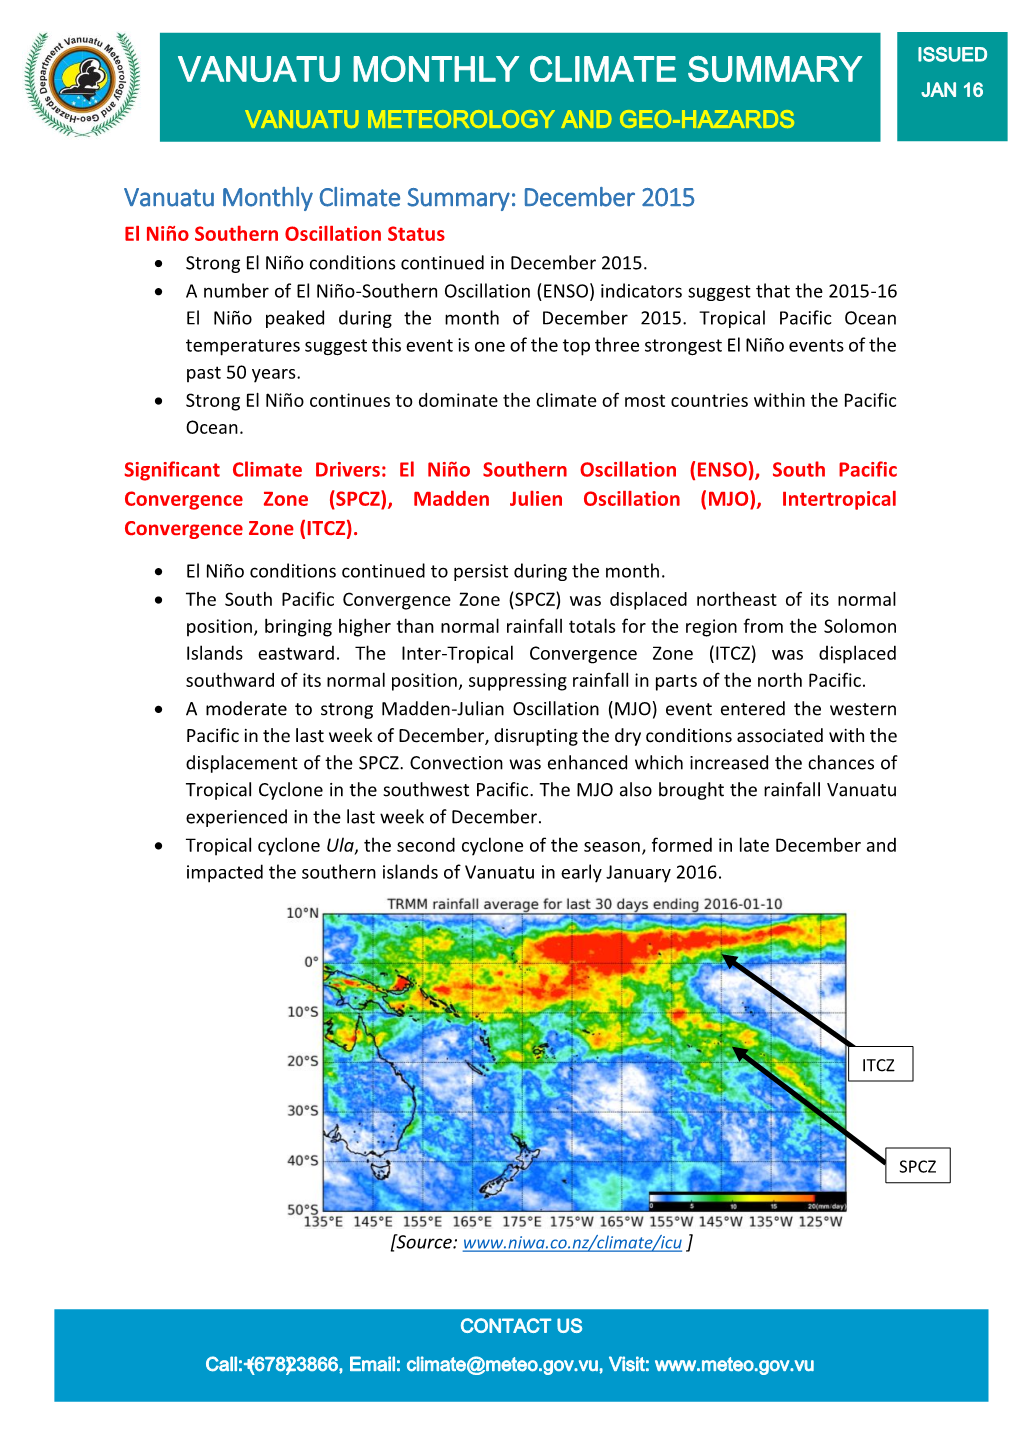 Vanuatu Monthly Climate Summary Issued Jan 16 Vanuatu Meteorology and Geo-Hazards